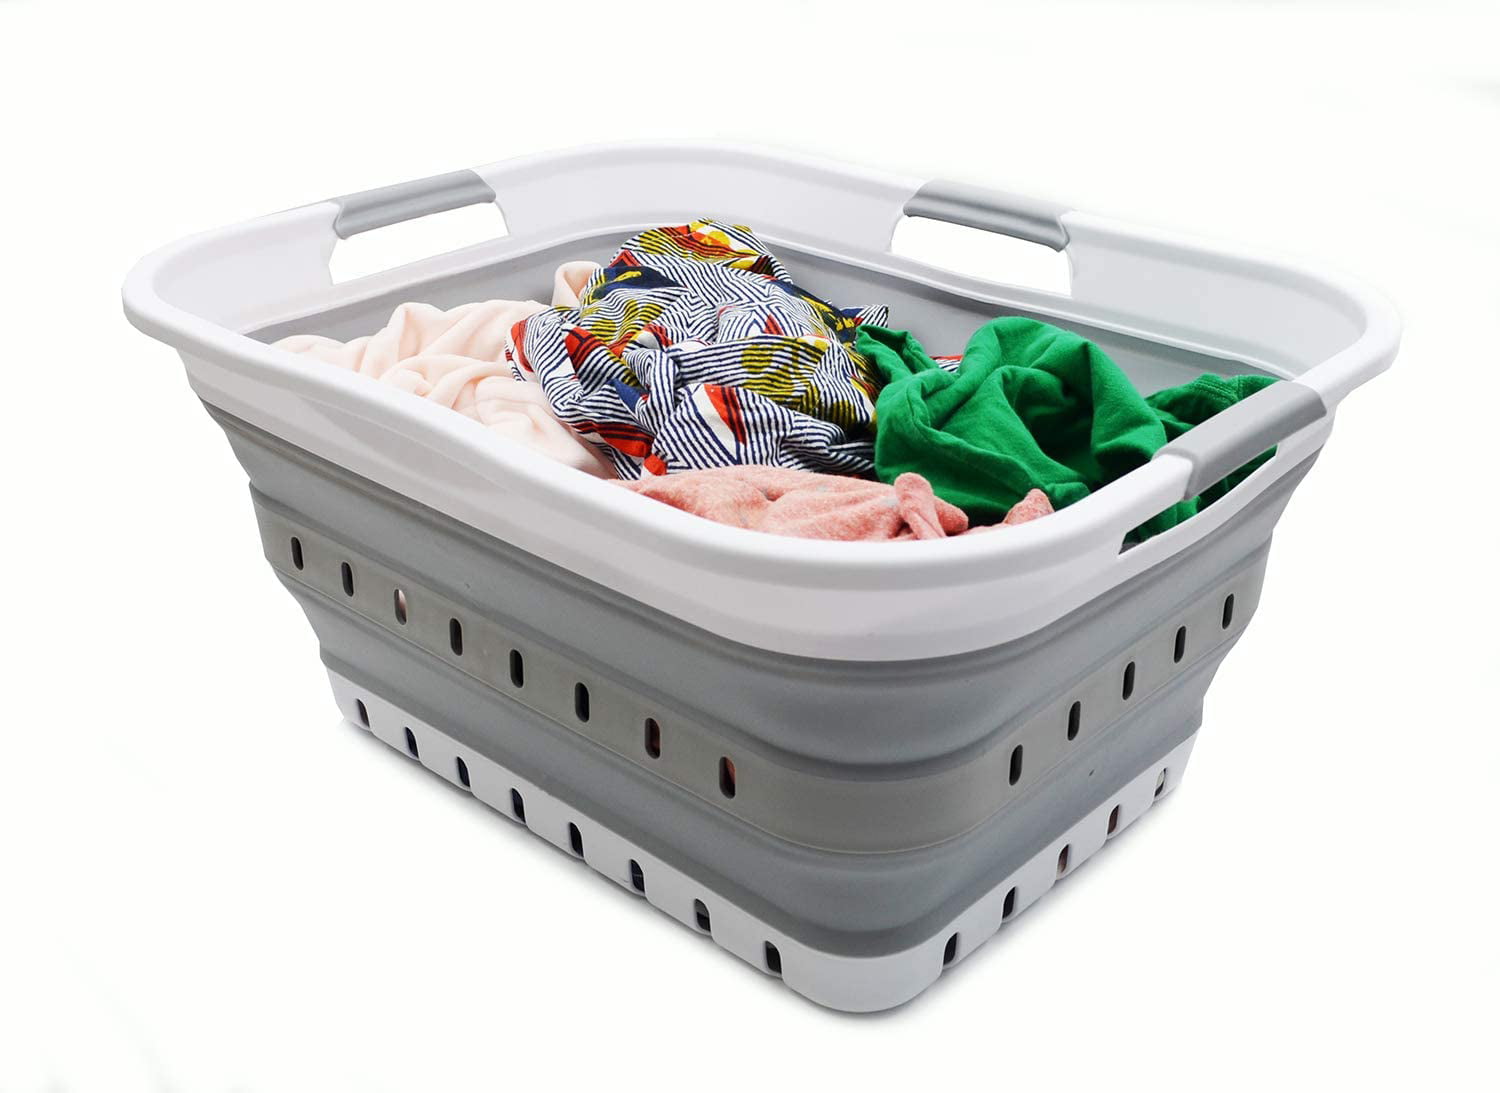  SAMMART 41L Collapsible 3 Handled Plastic Laundry Basket - Foldable  Pop Up Storage Container/Organizer - Portable Washing Tub - Space Saving  Hamper/Basket (3 handled rectangular, White/Lt. Purple) : Home & Kitchen